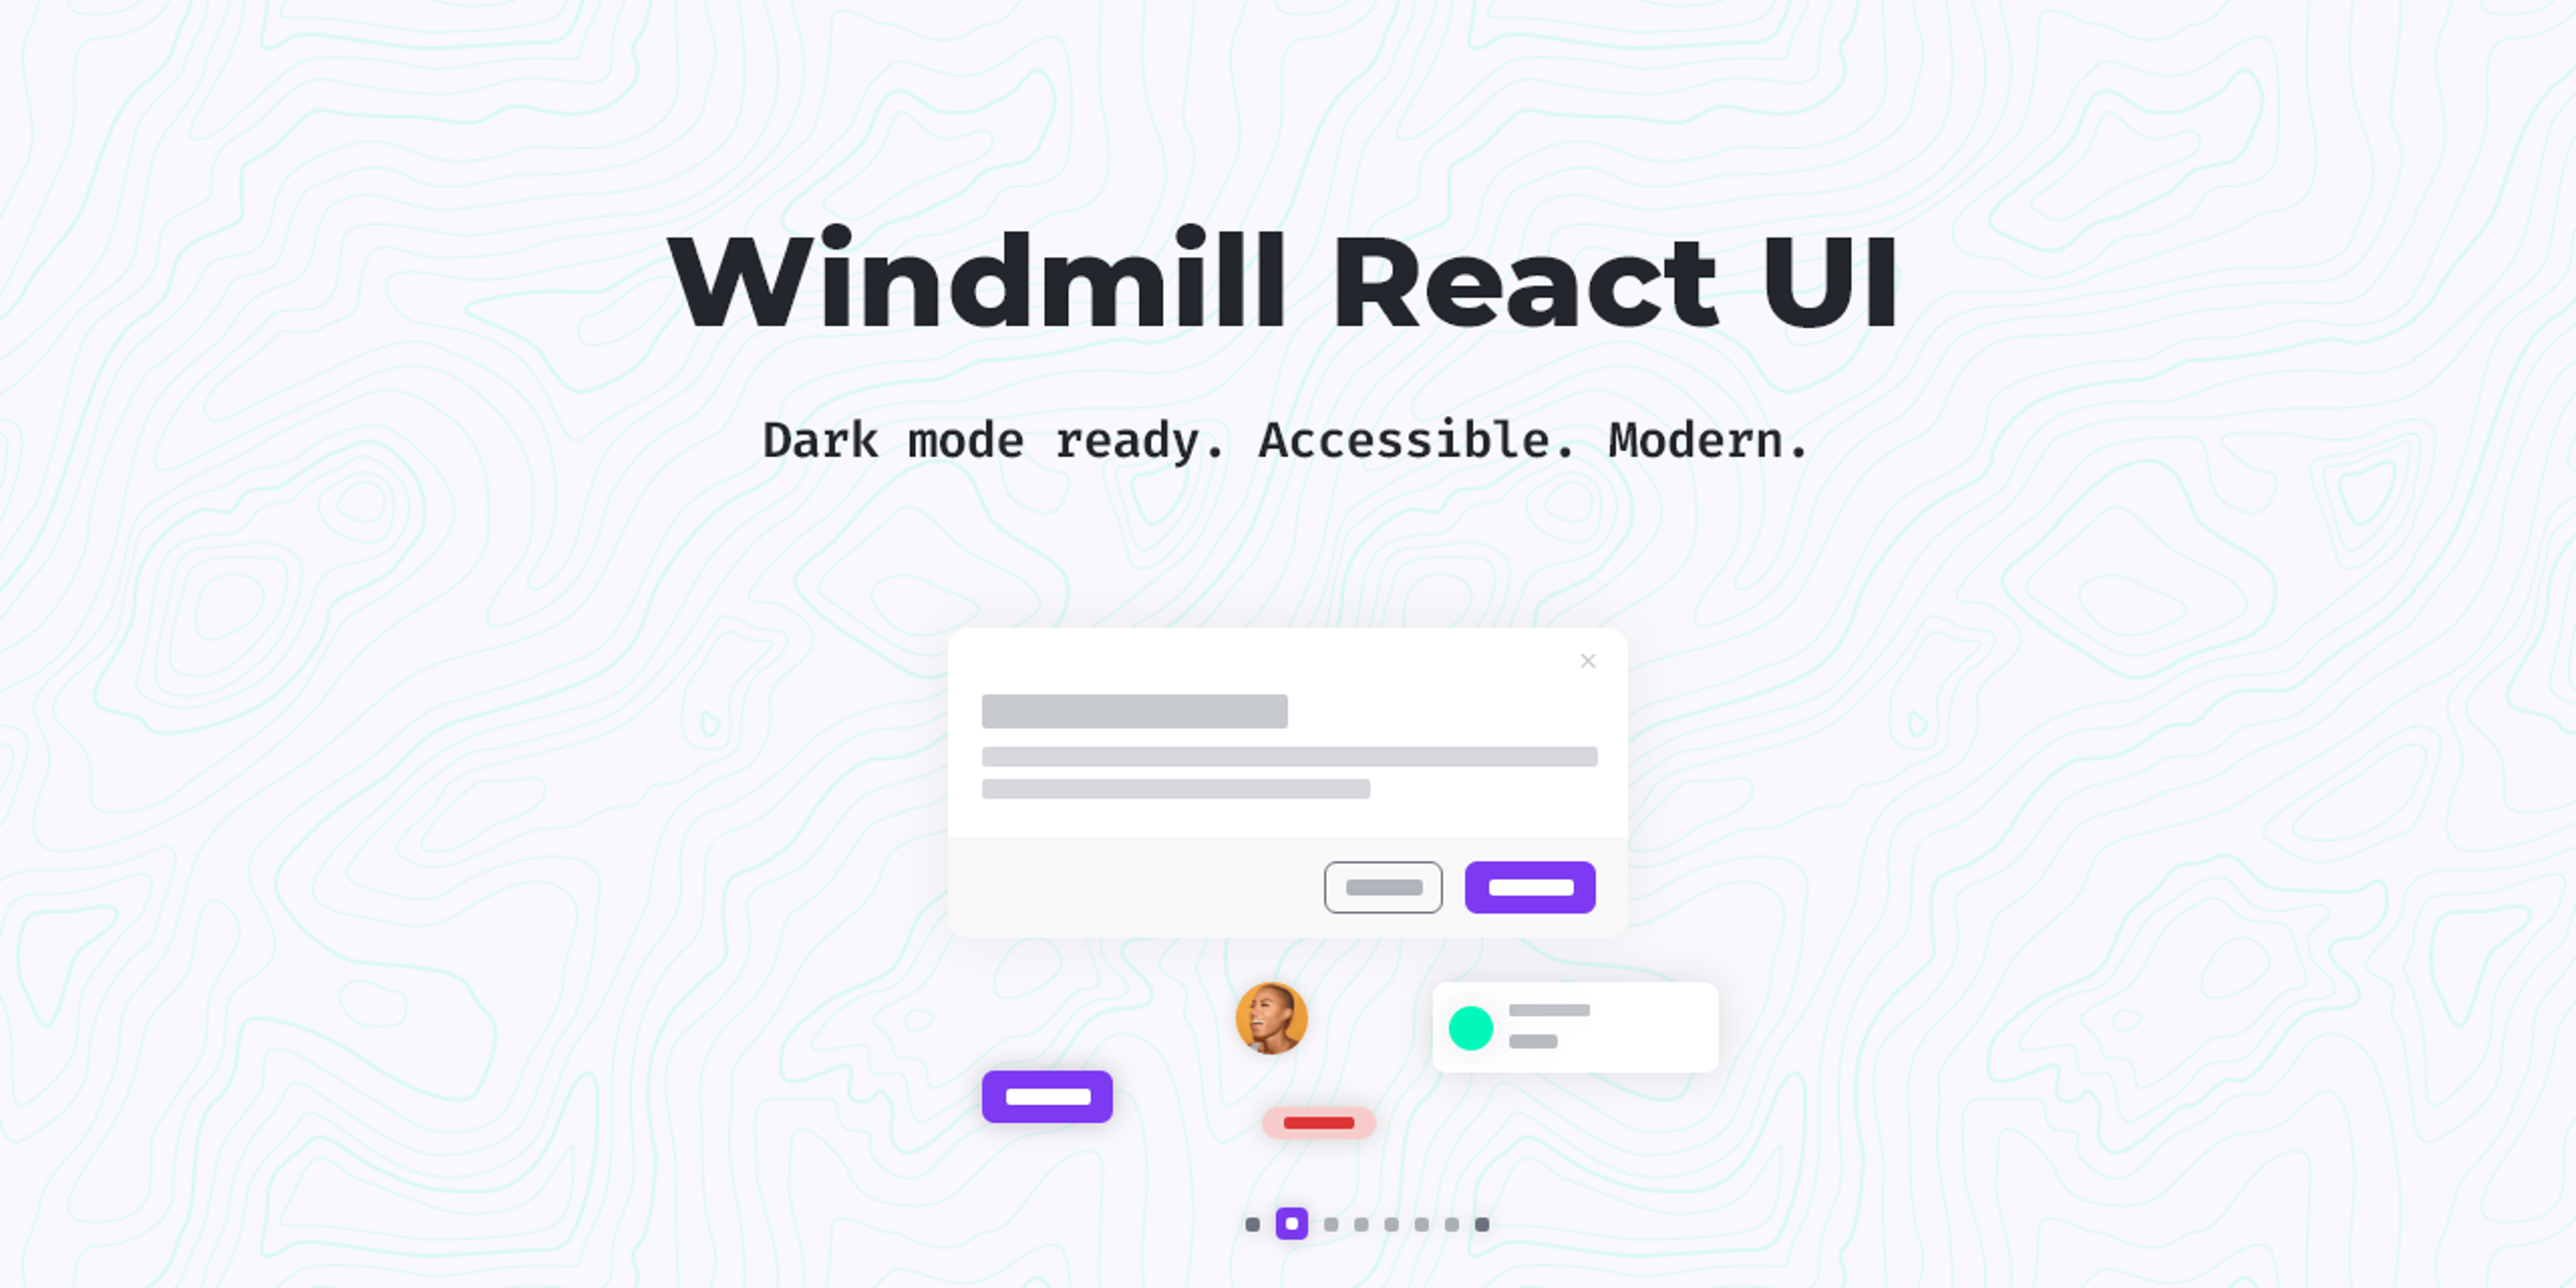 Windmill React UI